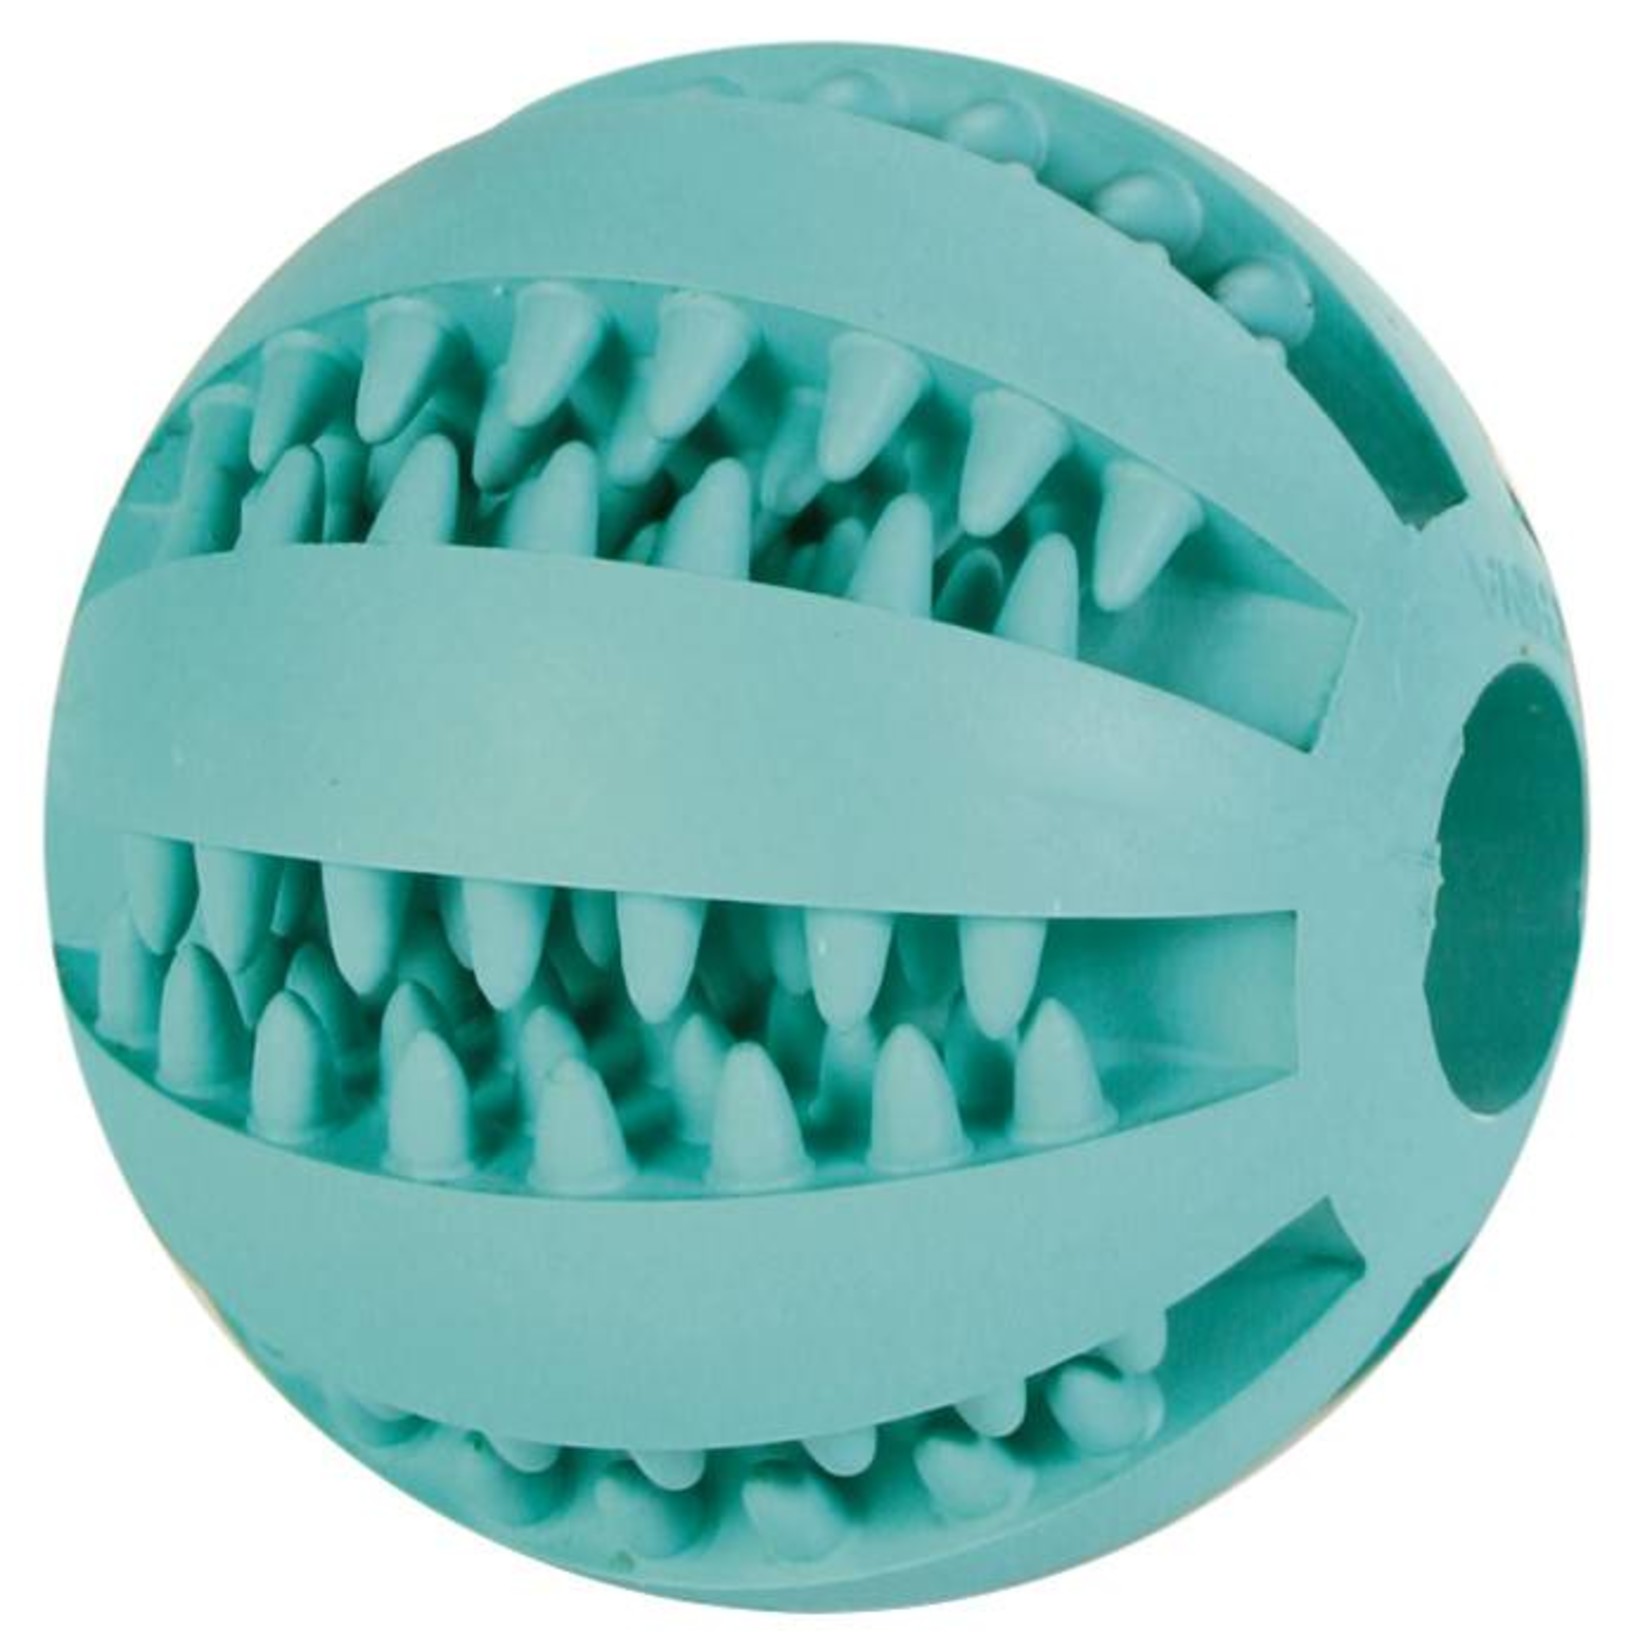 Trixie Denta Fun Baseball Mint Flavour Rubber Dog Toy, 5cm 'CLEARANCE'